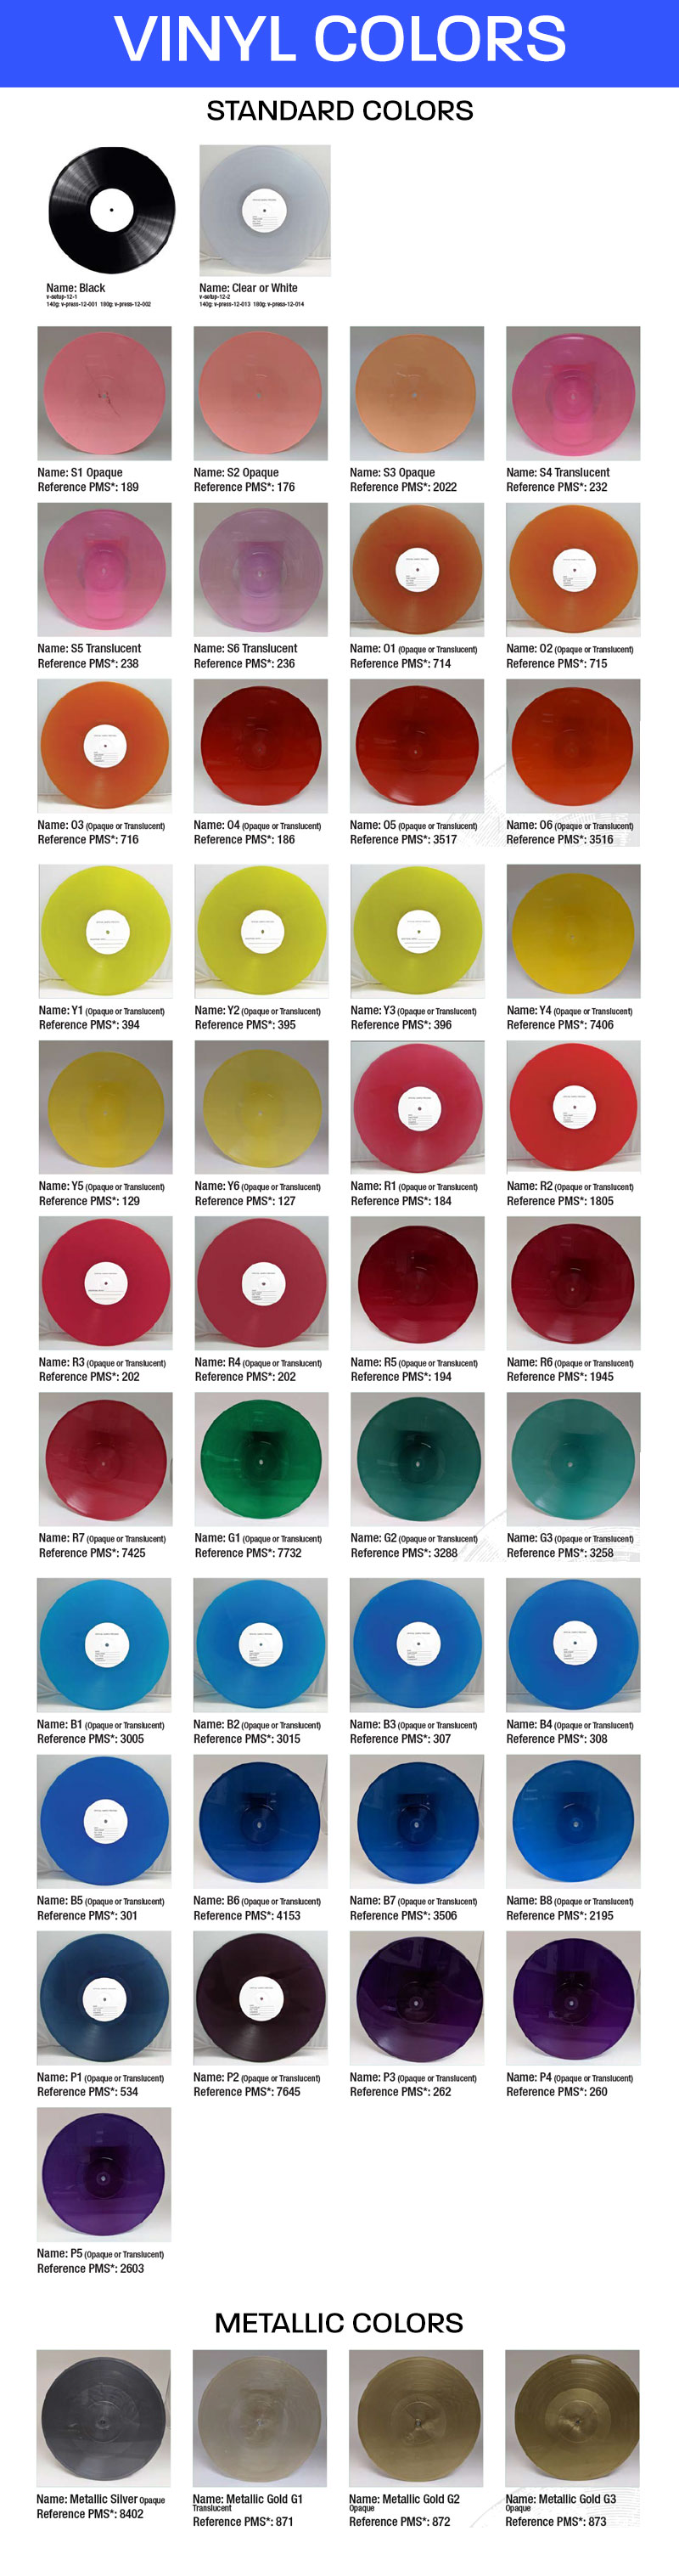 Vinyl colors from Duplication.com